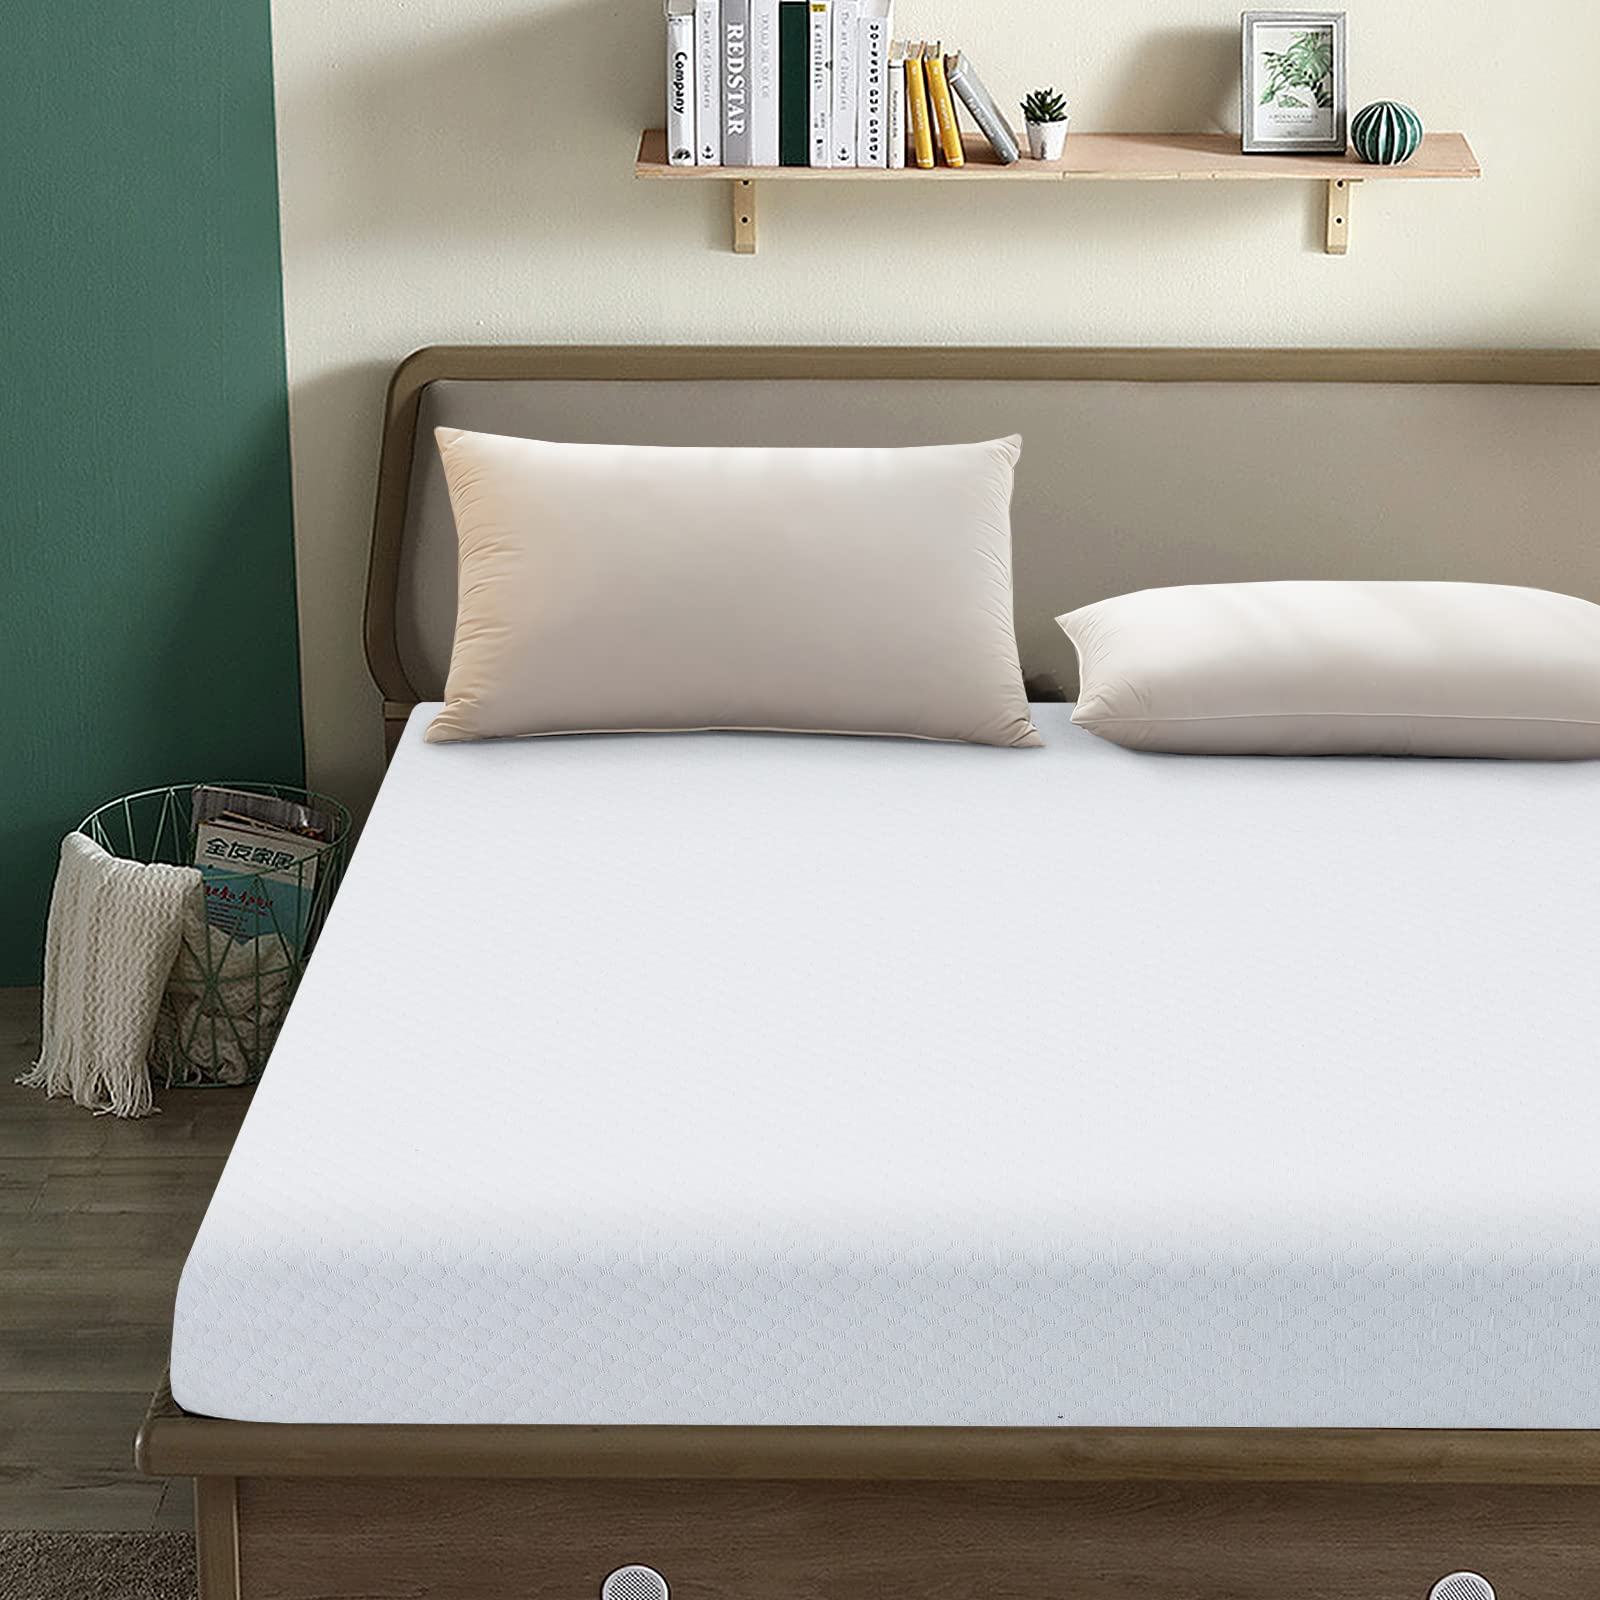 Giantex 10 Inch Mattress, Air Foam for Cool Sleep